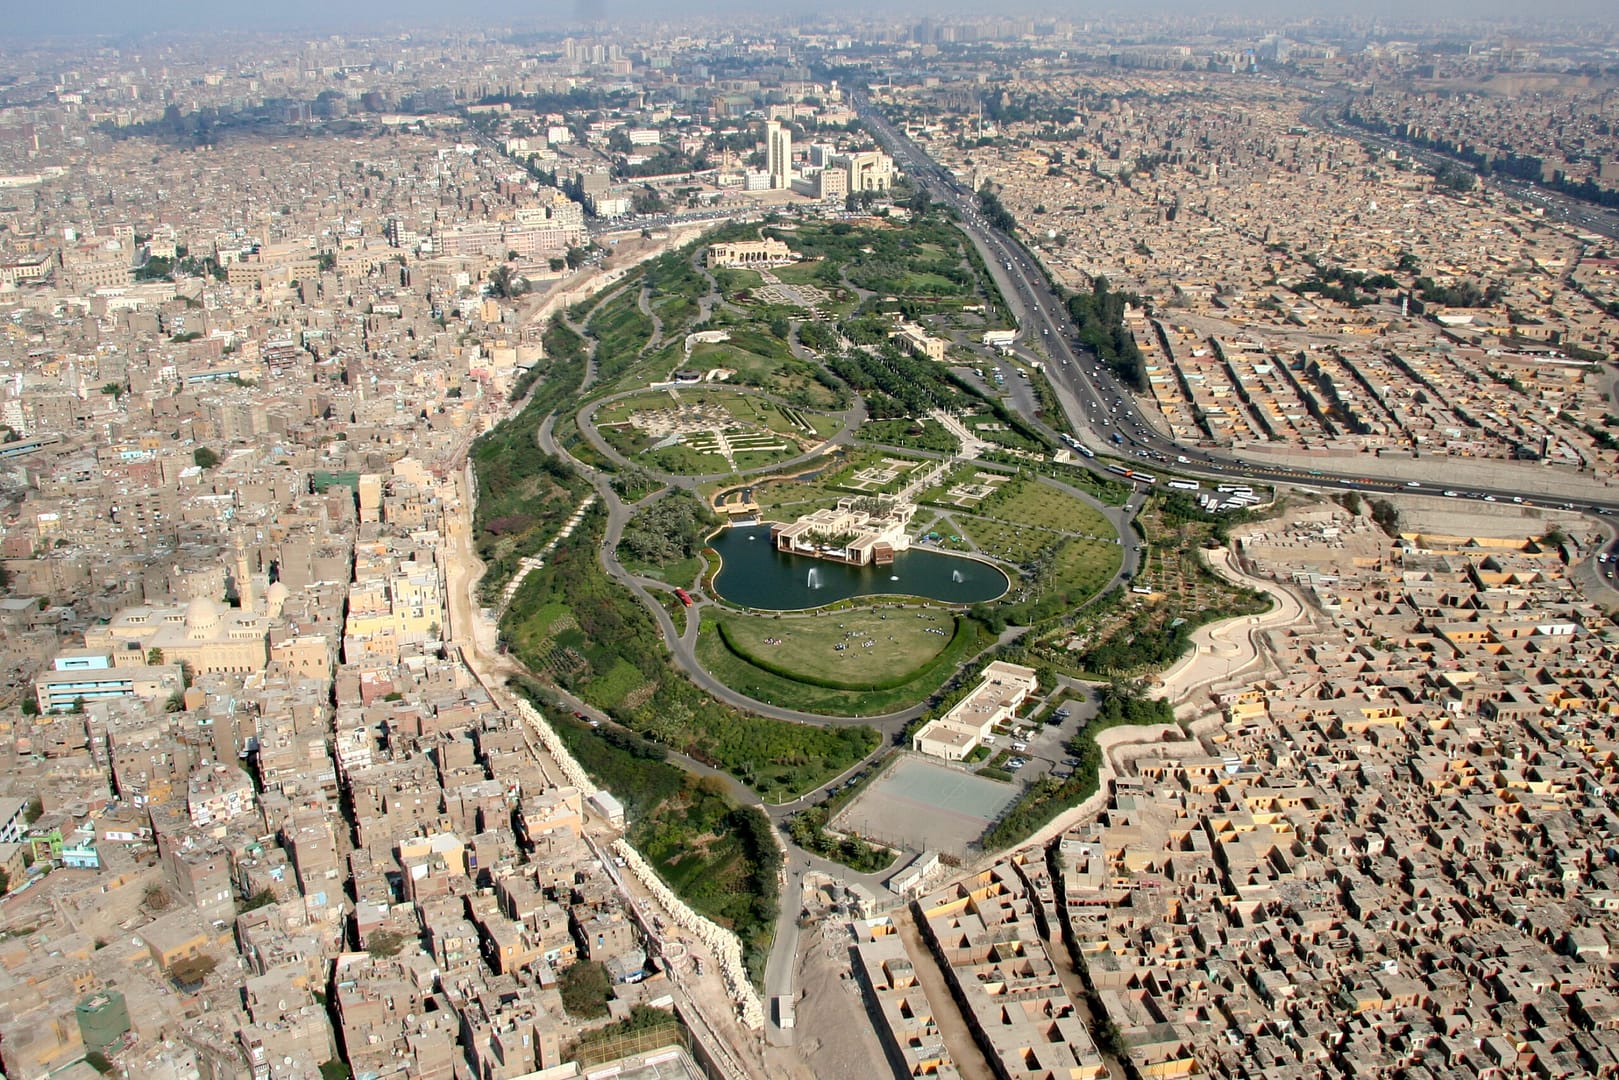 al azhar park - cairo city - egypt